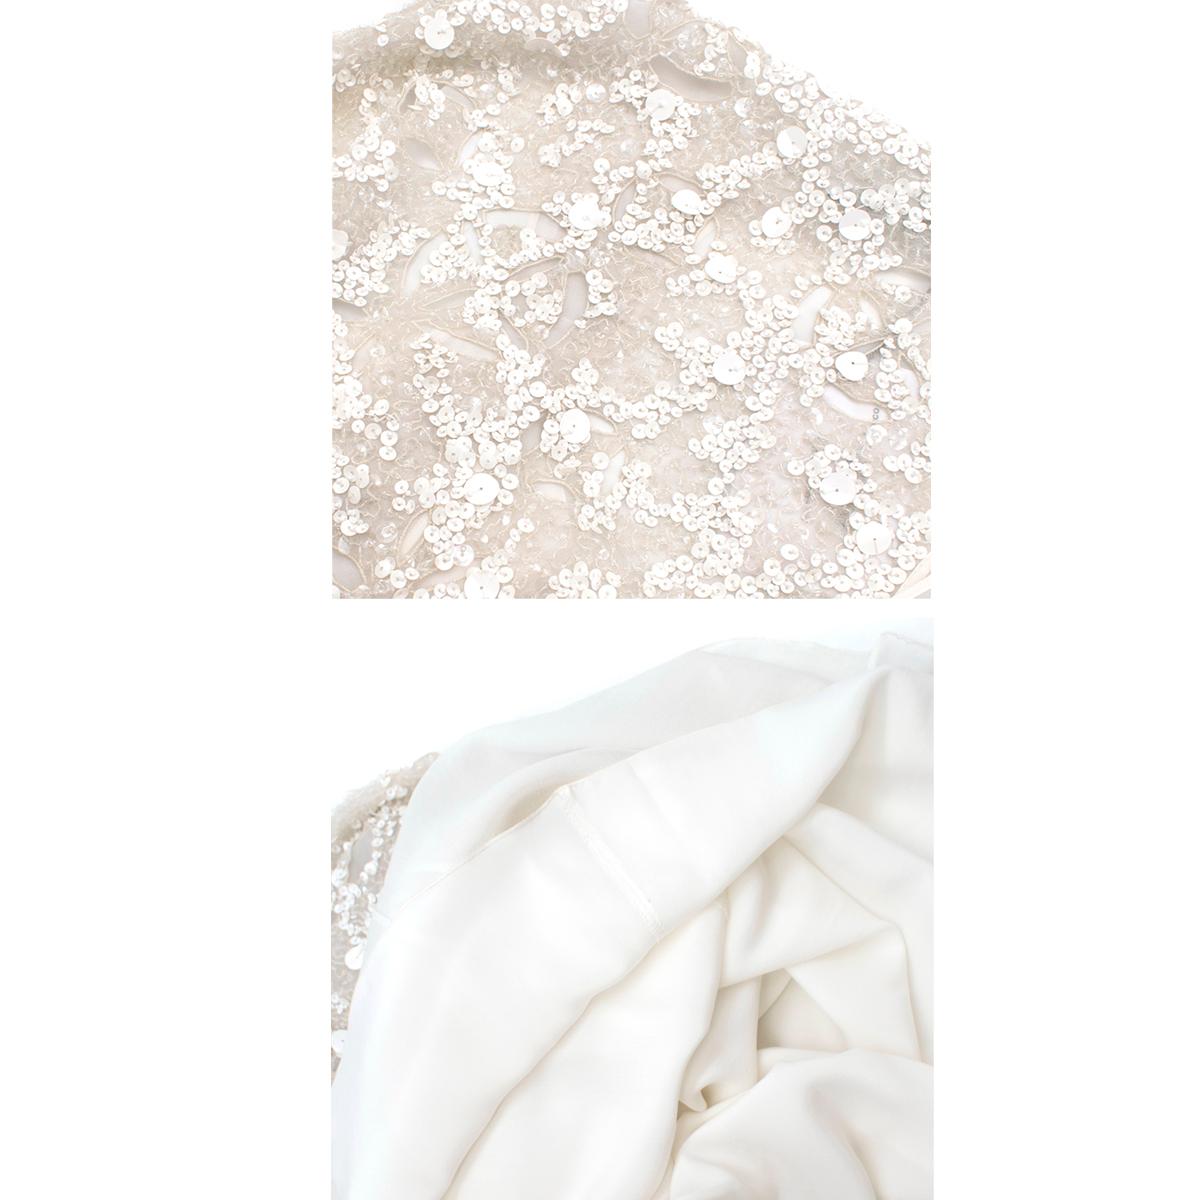 Blugirl White Sequin Embellished Midi Dress estimated size S For Sale 2